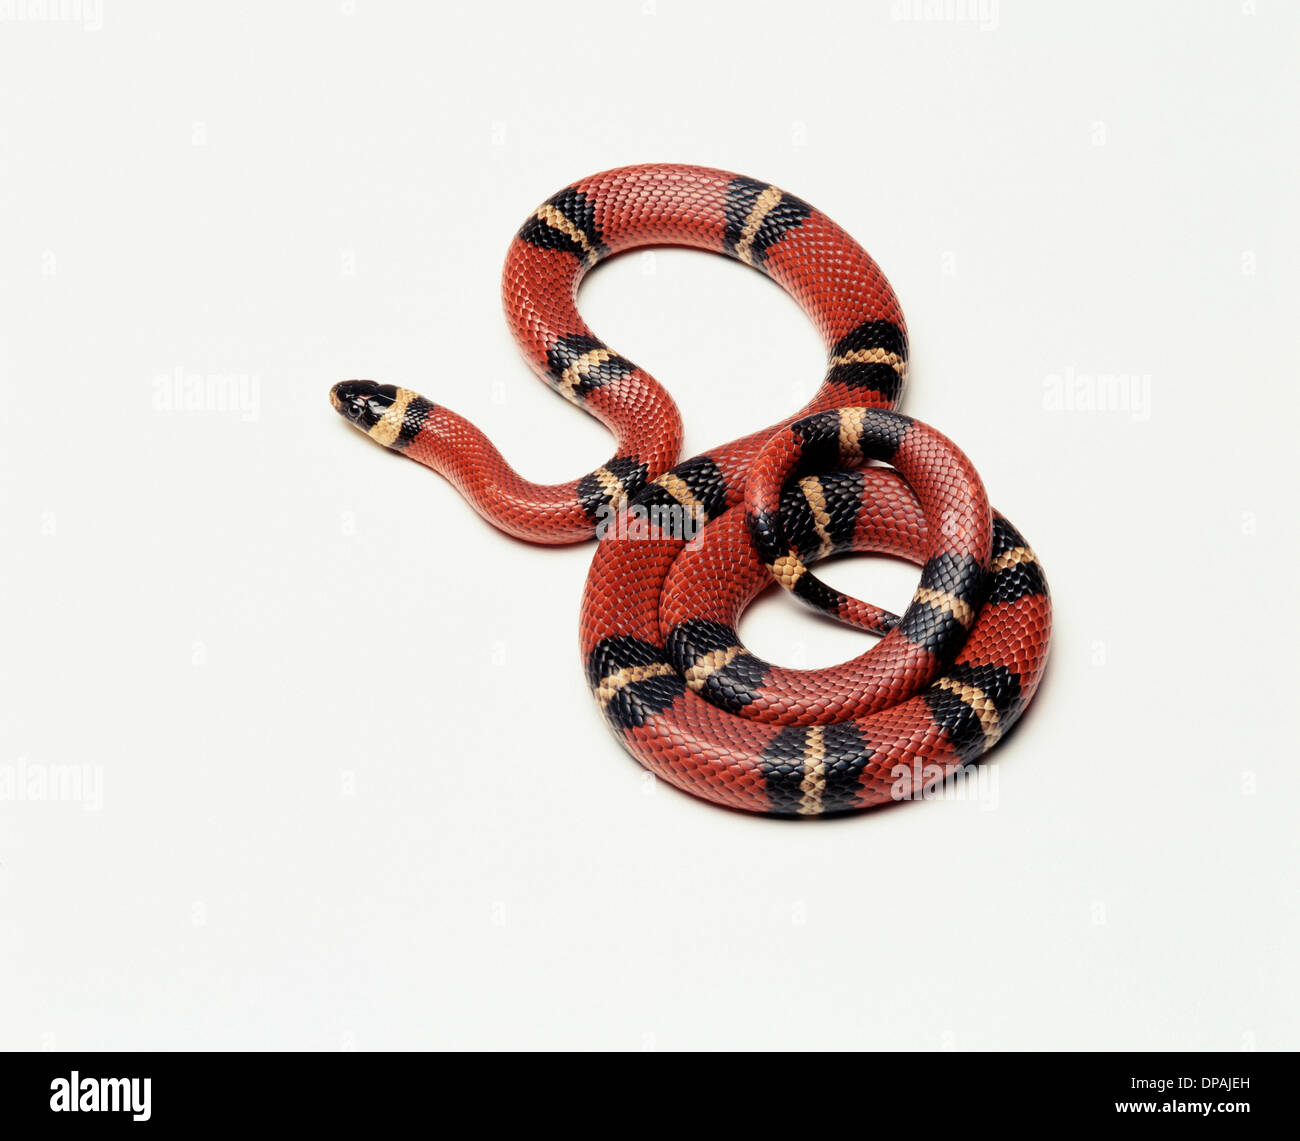 Pueblan Milk Snake (Lampropeltis trangulum campbelli), Foto de estudio Foto de stock